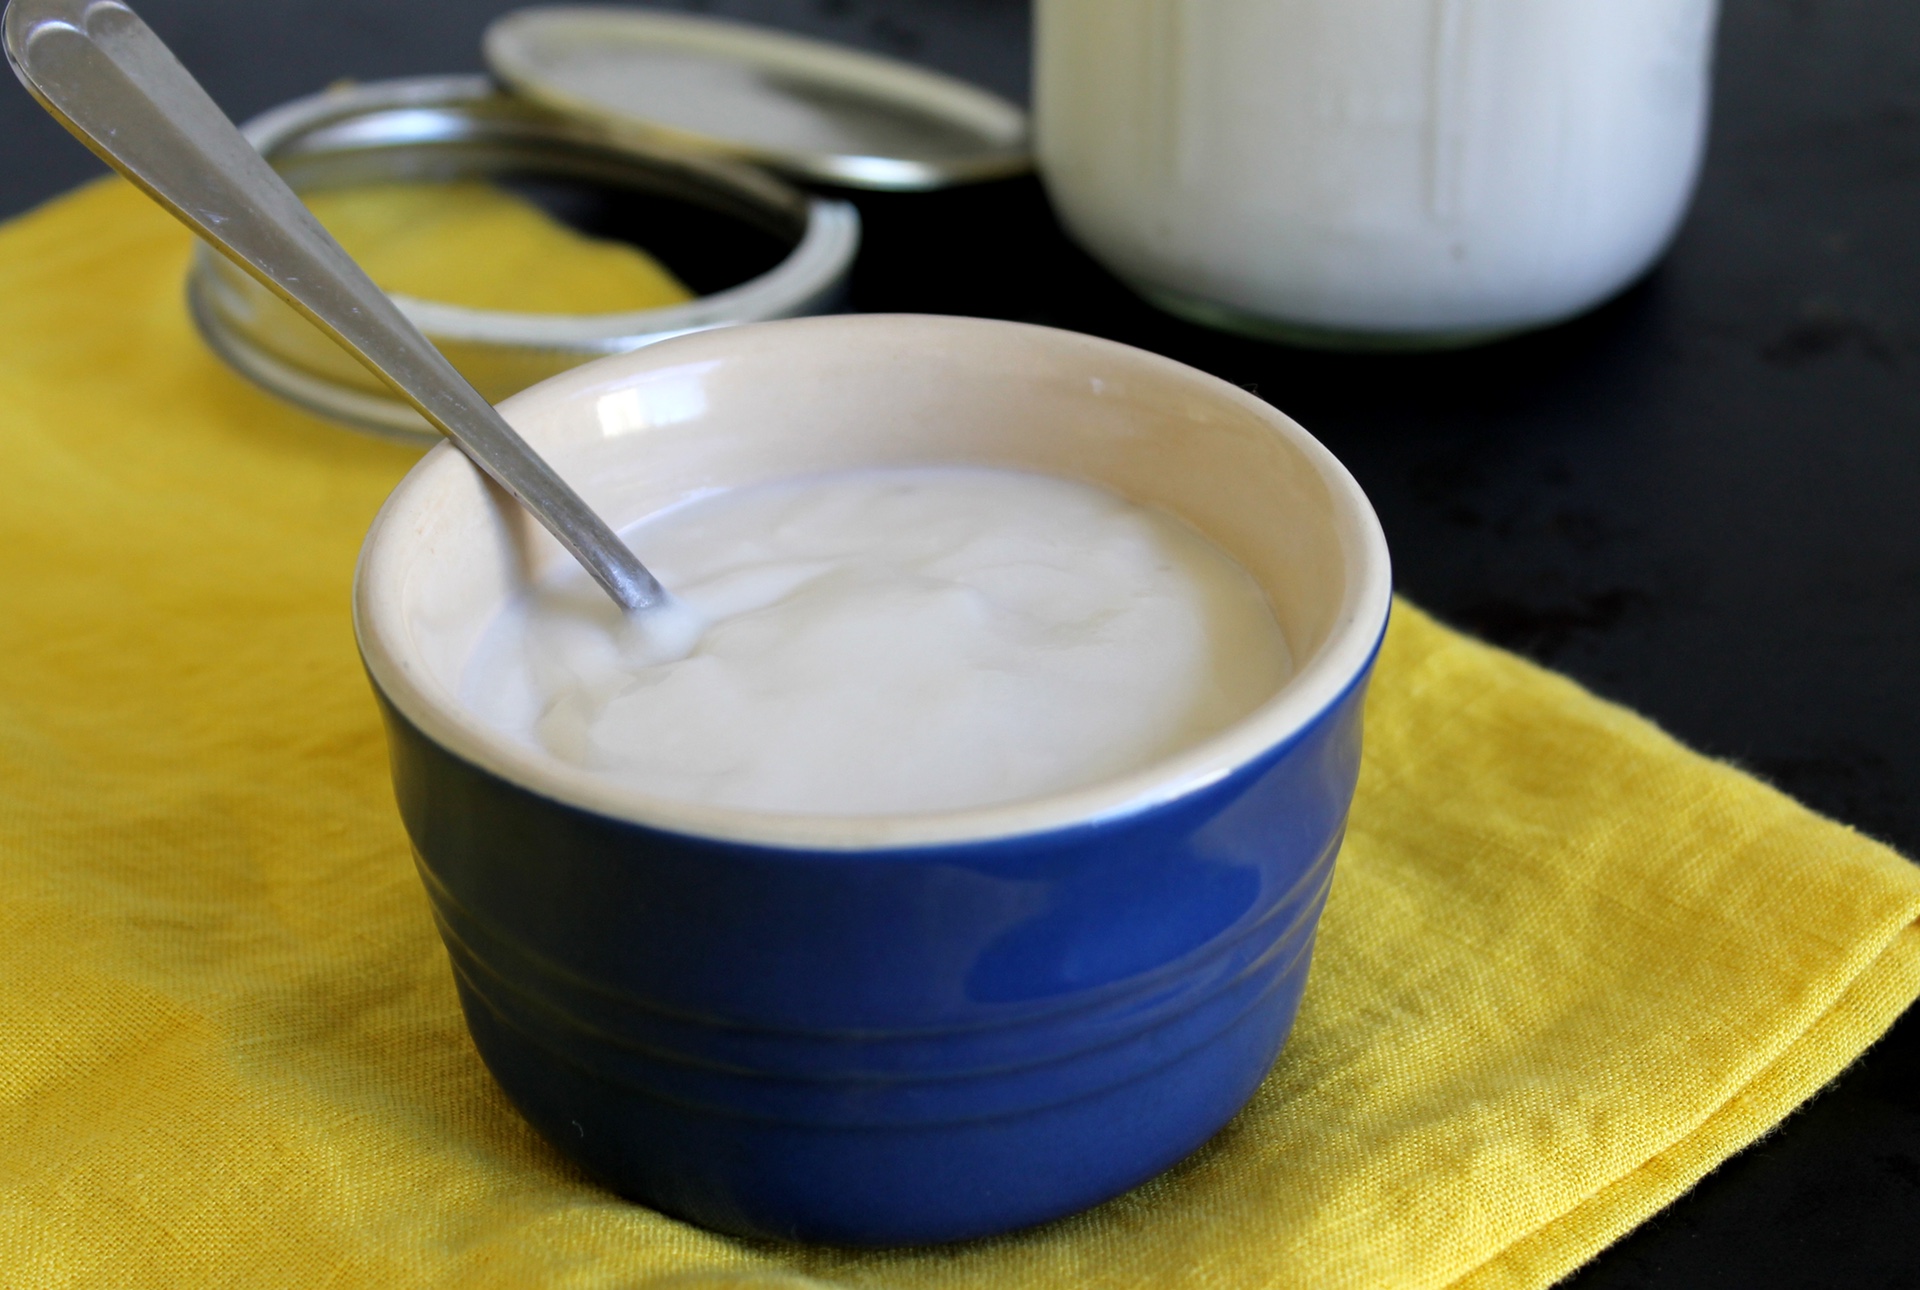 Homemade coconut and almond milk yogurt.